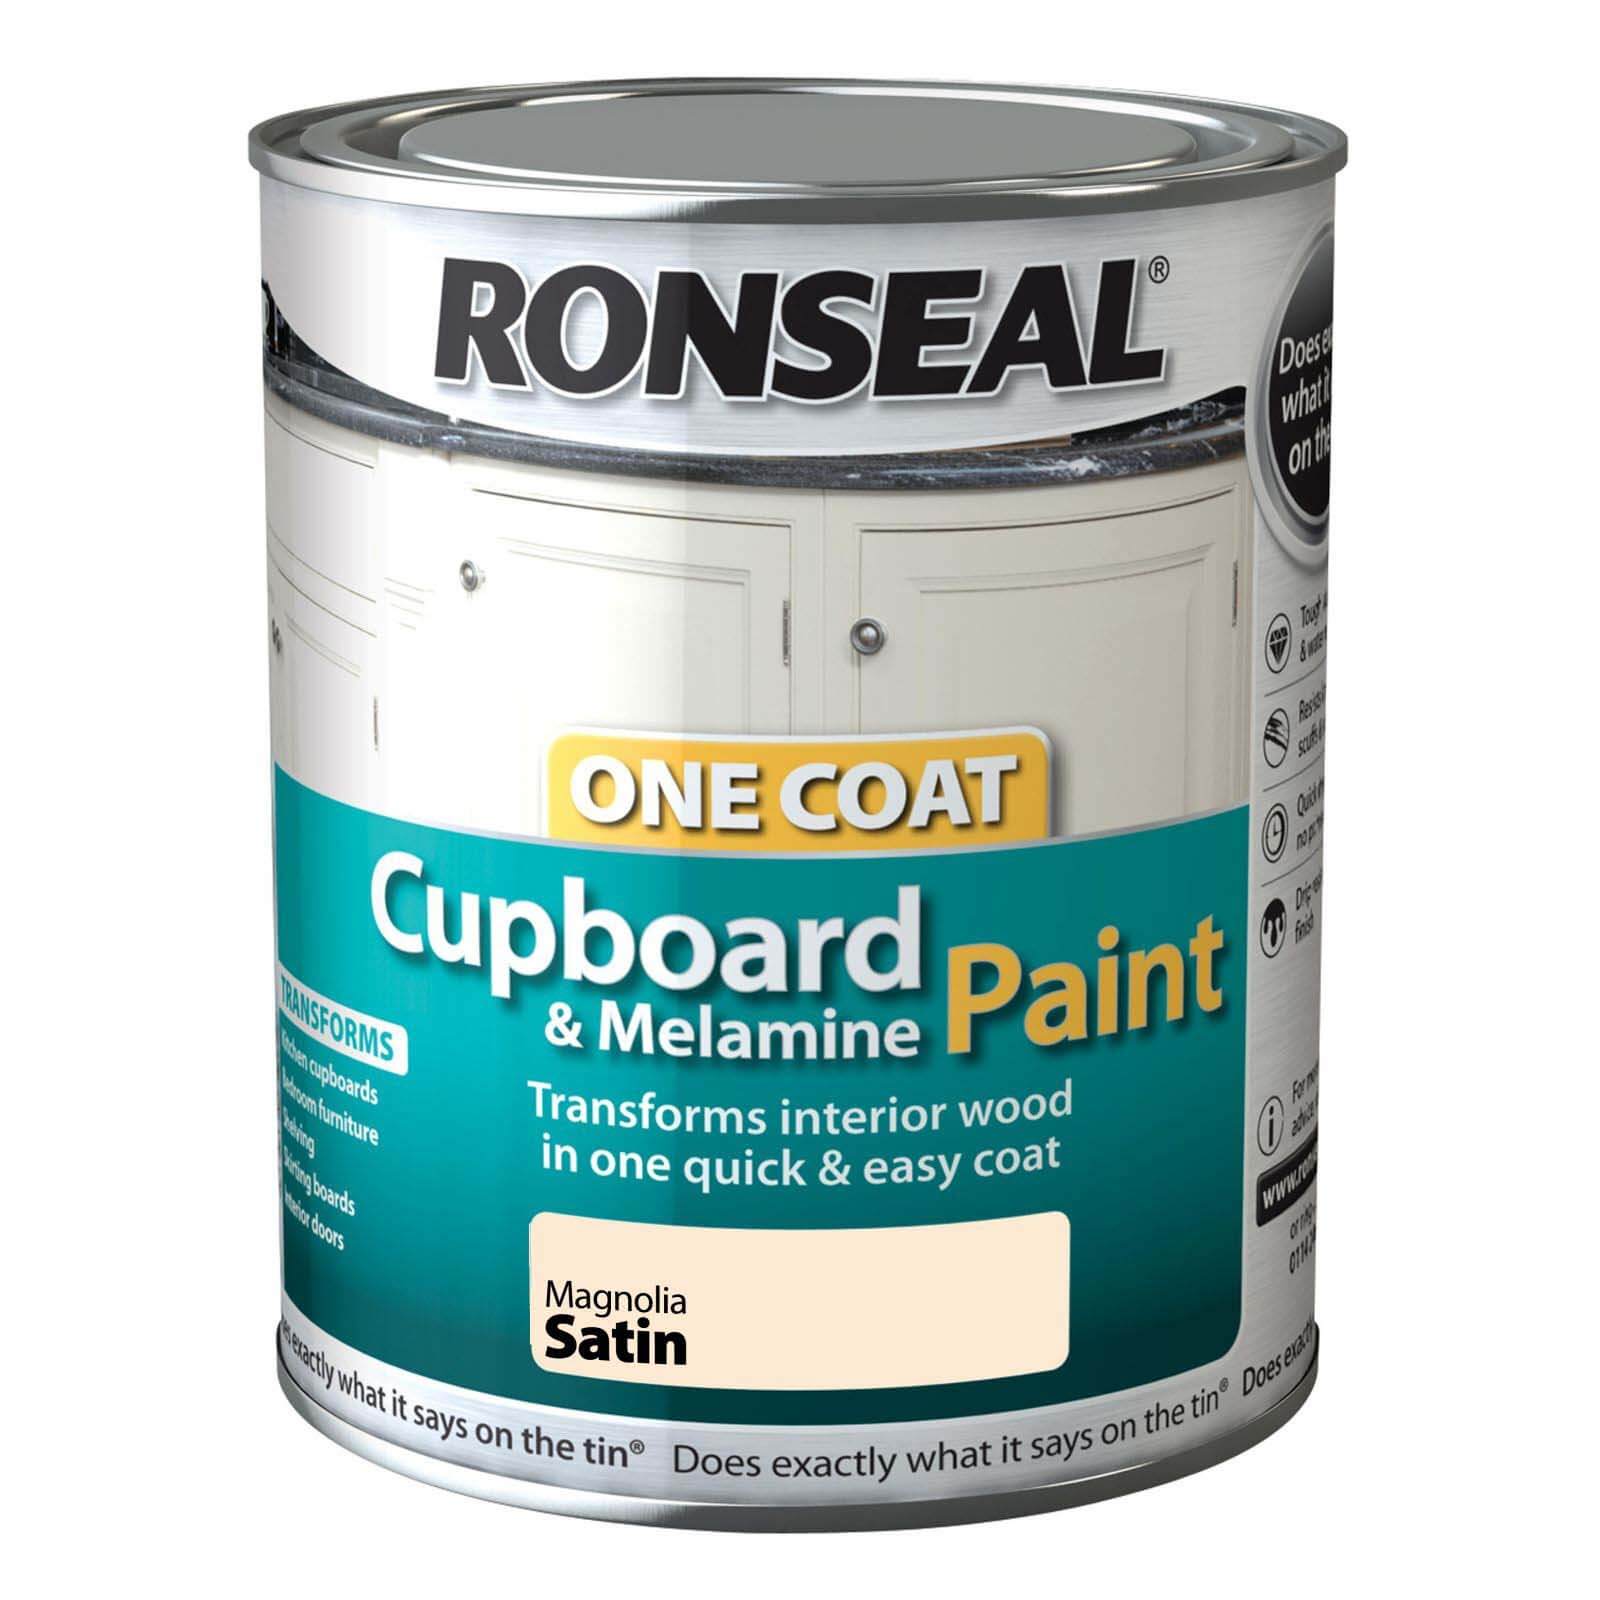 Ronseal One Coat Cupboard & Melamine Paint Magnolia Satin - 750ml